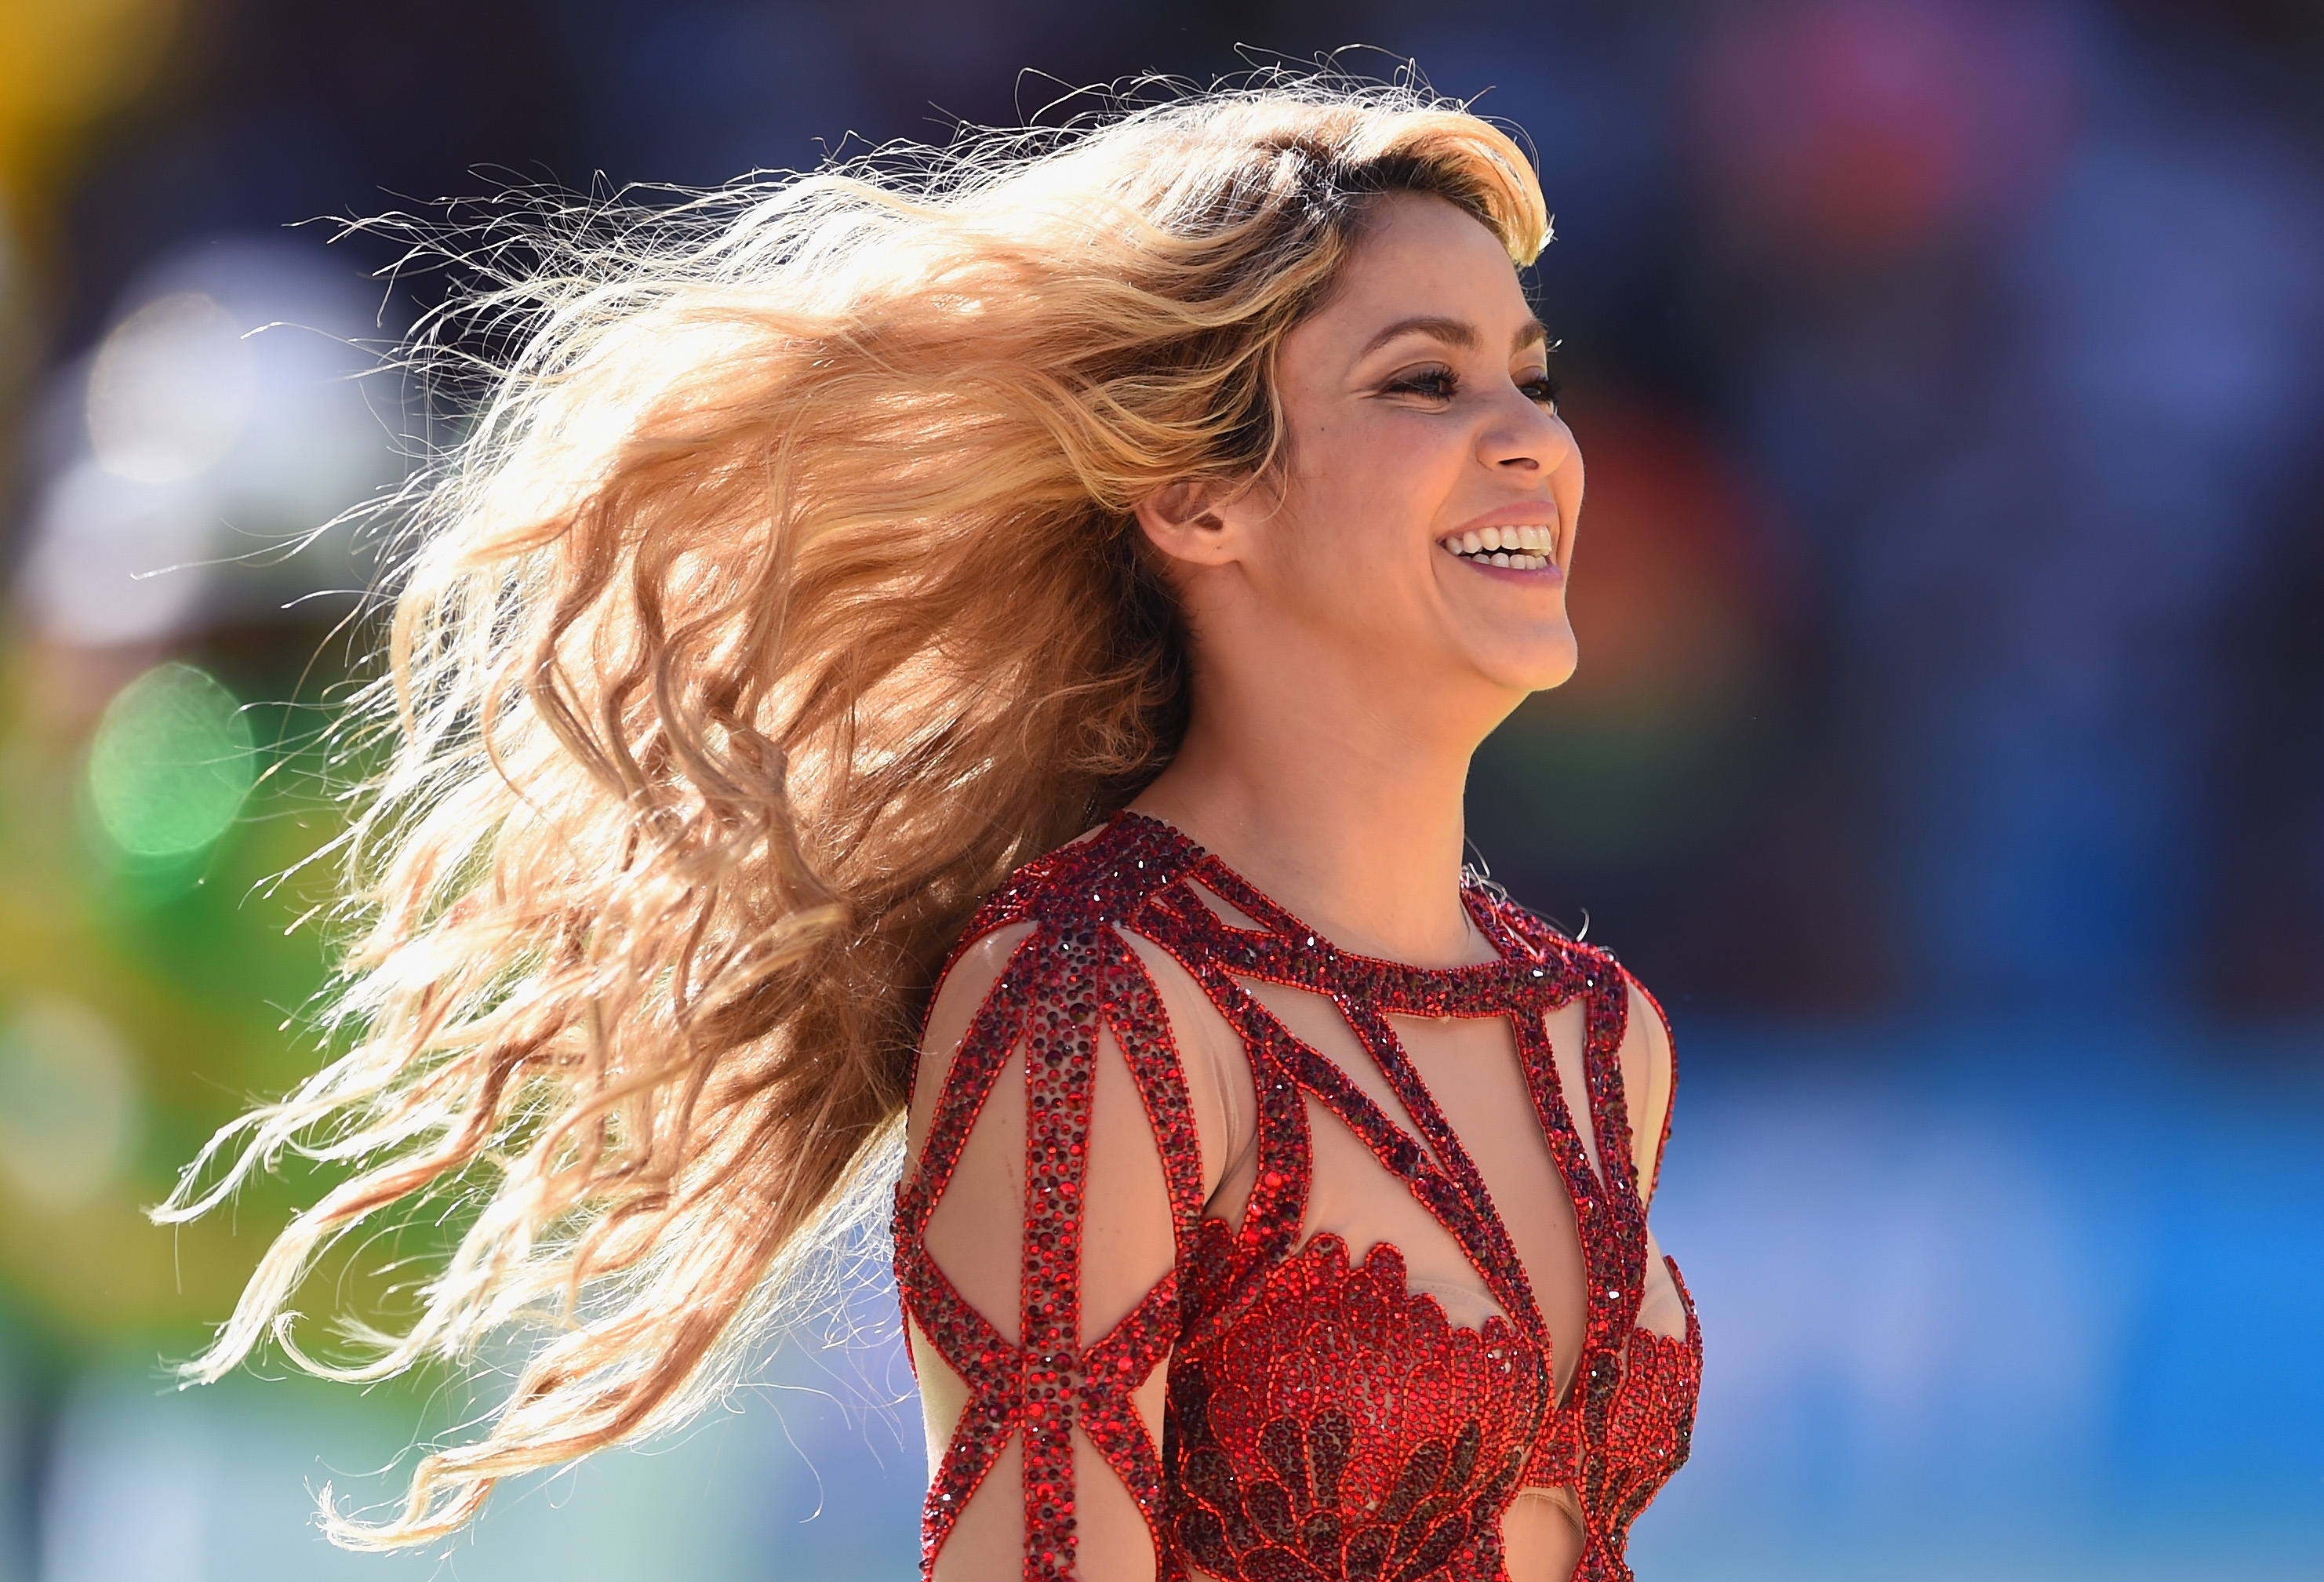 Shakira Iggy Azalea Edly Working On Song Together For New Album